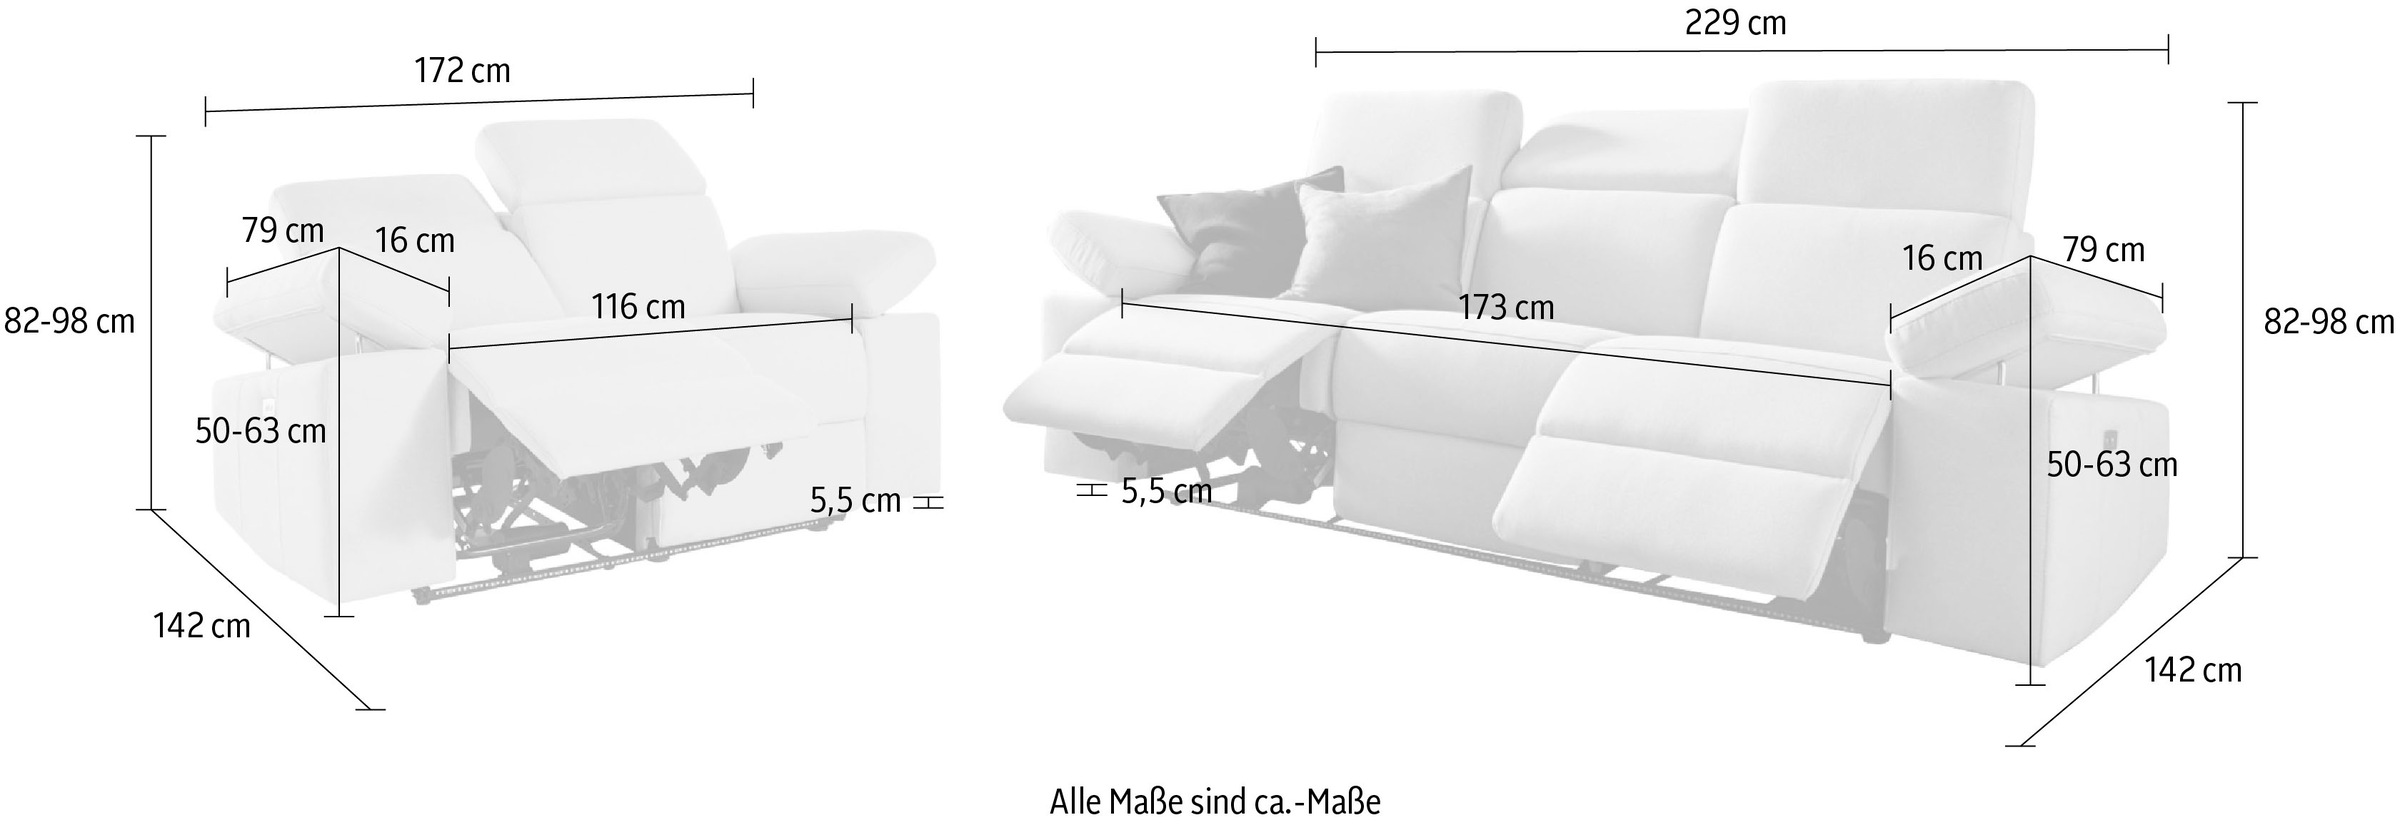 Places of Style Sitzgruppe »Kilado«, mit Relaxfunktion, verstellbarer Armlehne, Kopfteilverstellung